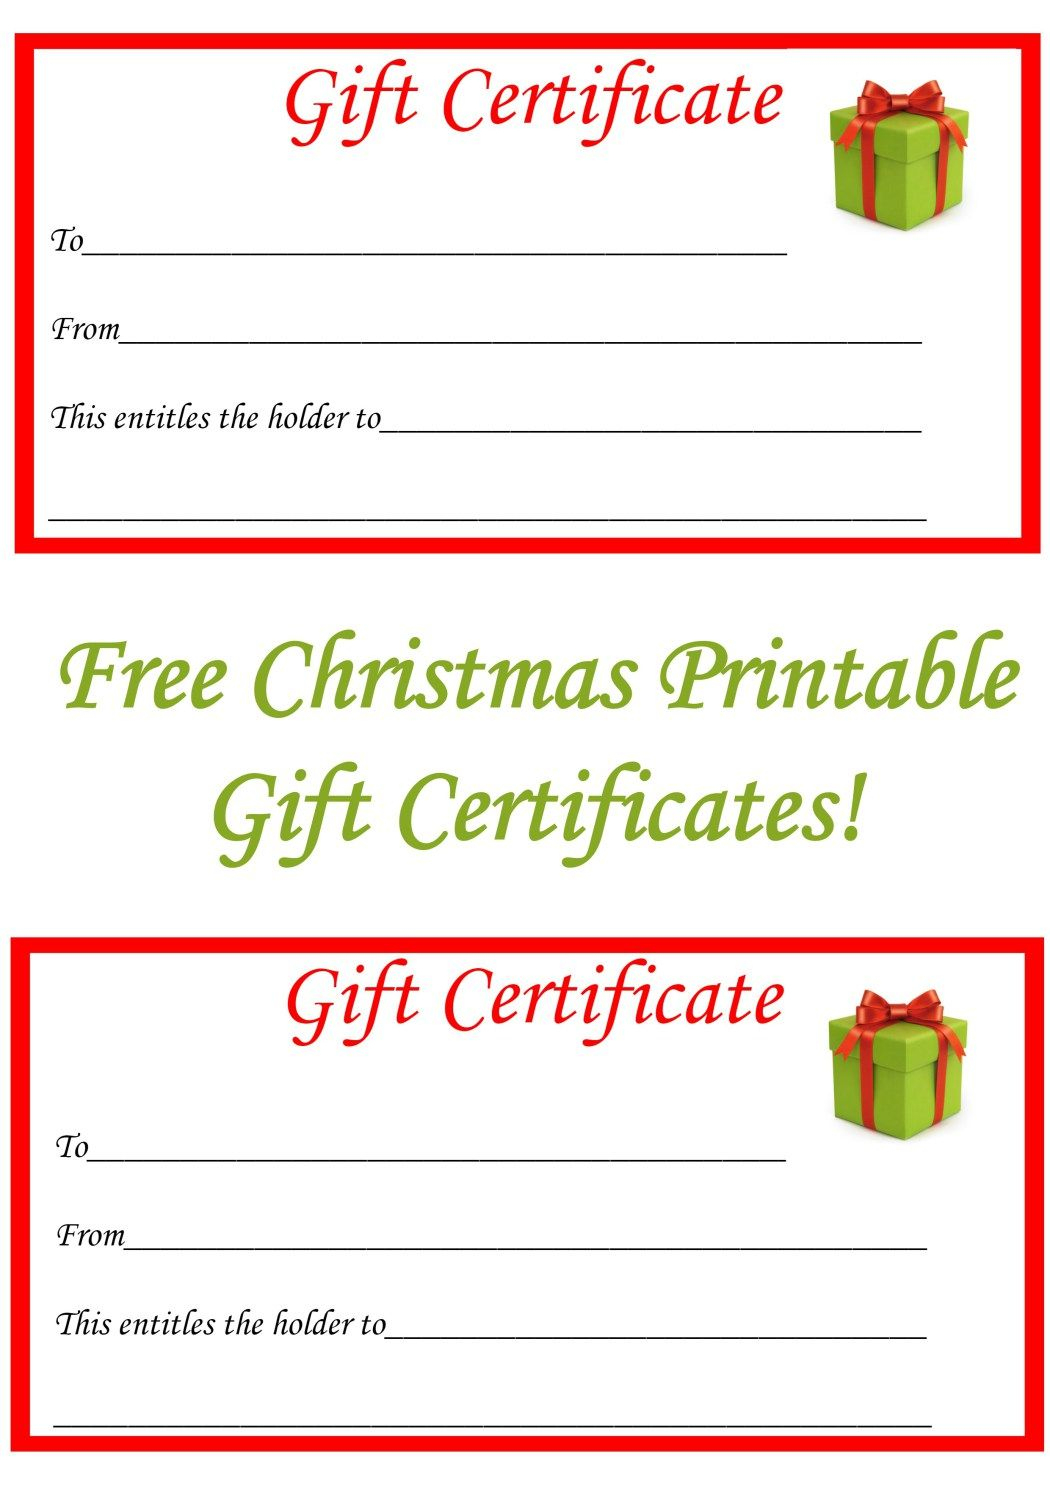 Free Christmas Printable Gift Certificates | Gift Ideas | Pinterest - Free Printable Christmas Gift Voucher Templates